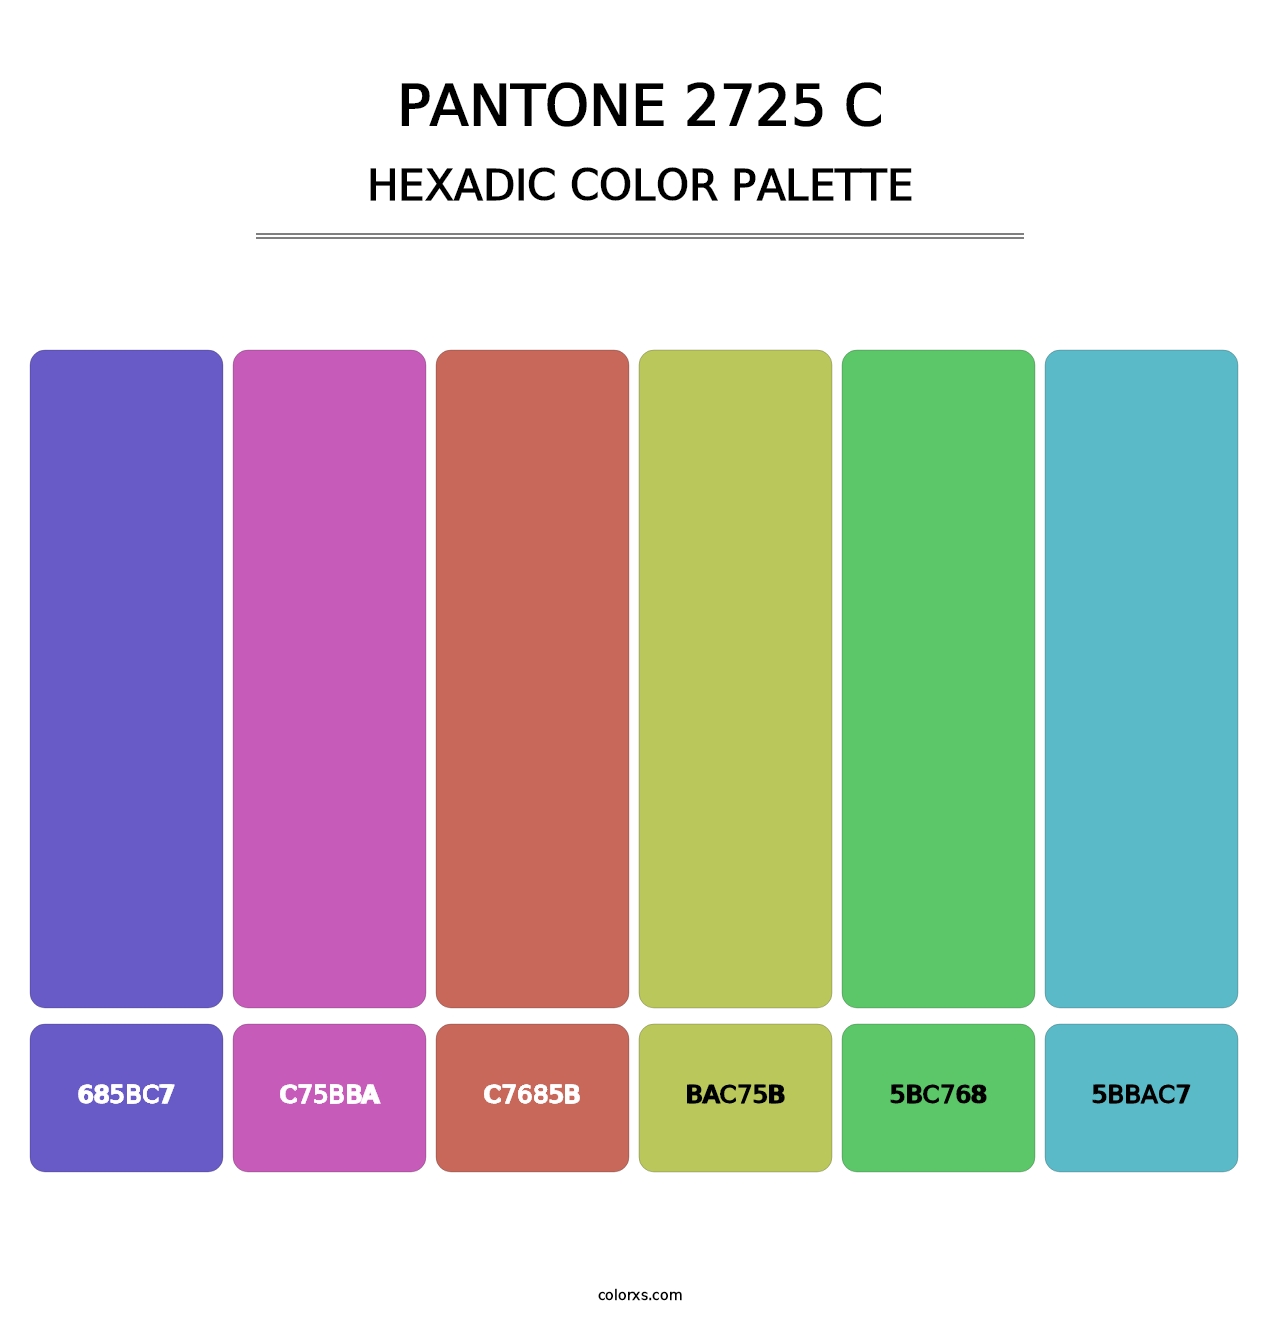 PANTONE 2725 C - Hexadic Color Palette